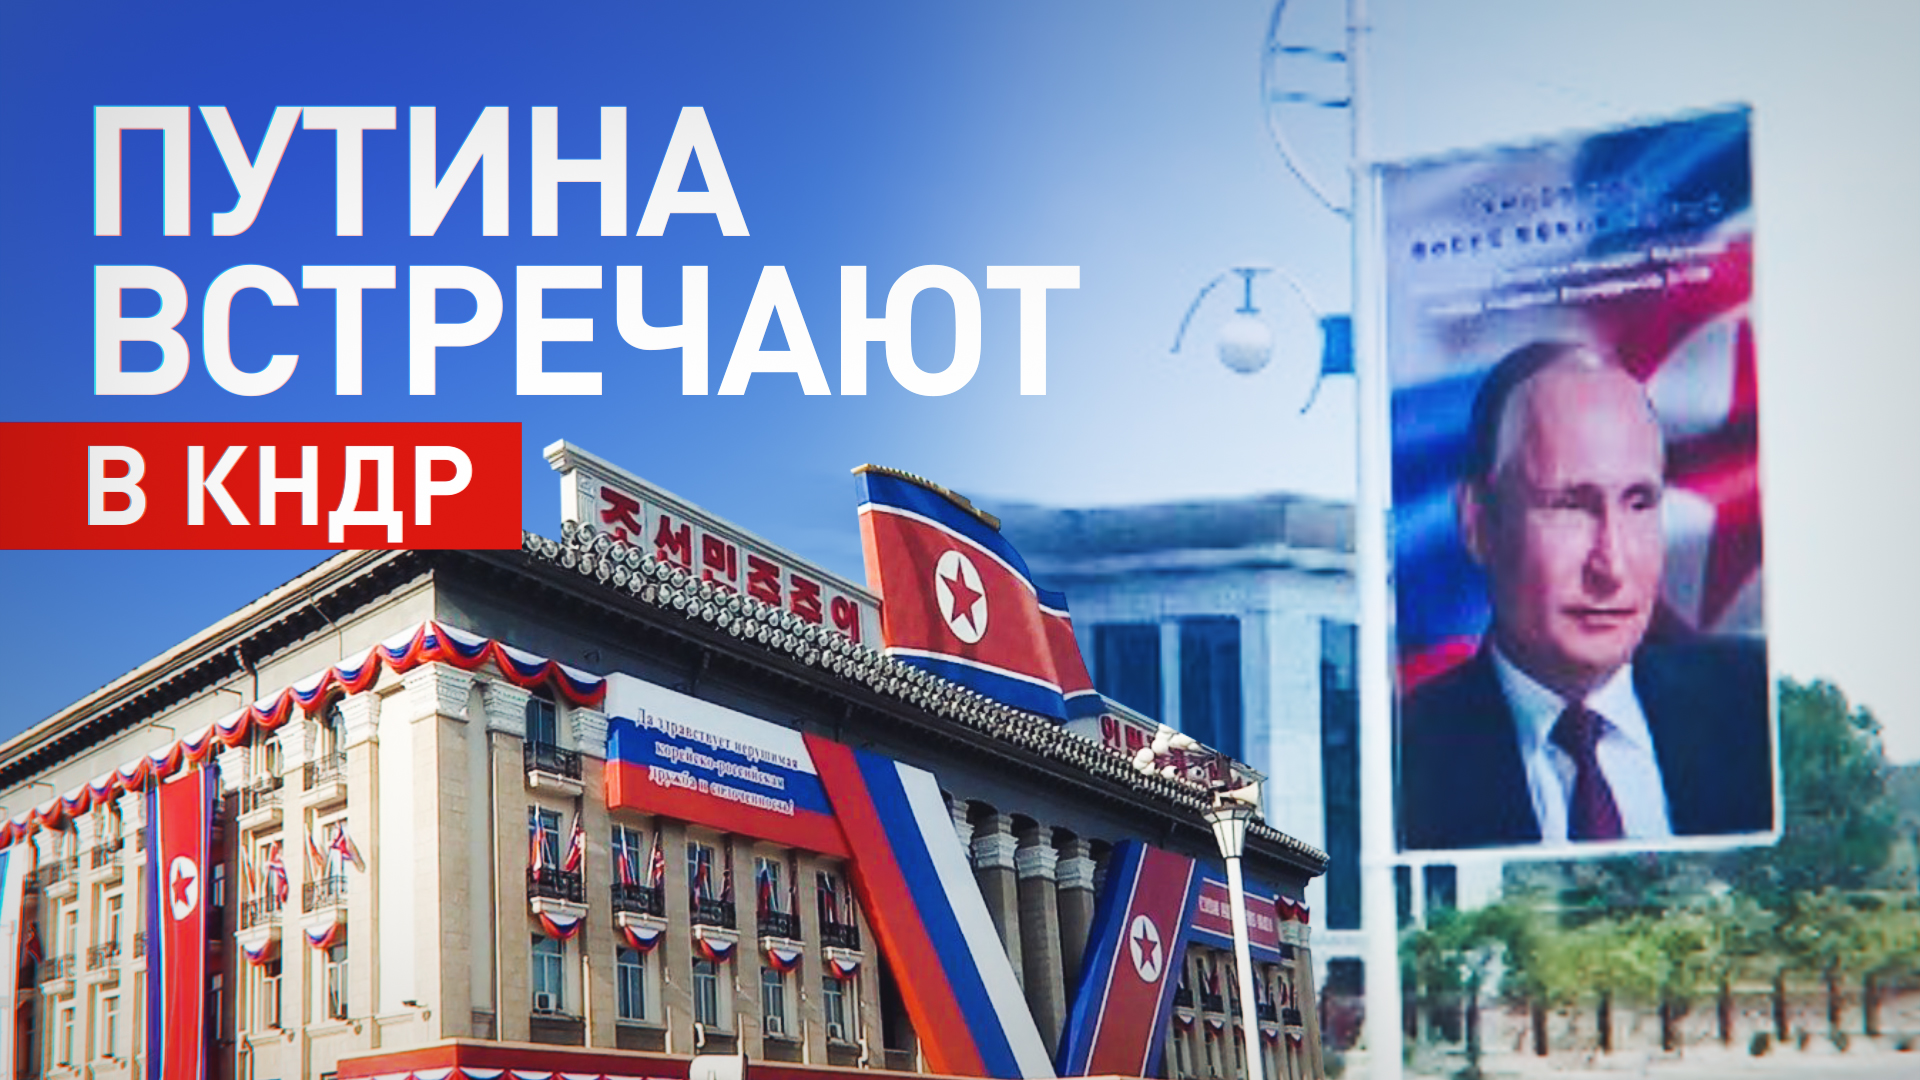 Столицу КНДР украсили российскими флагами и портретами Путина к его визиту — видео